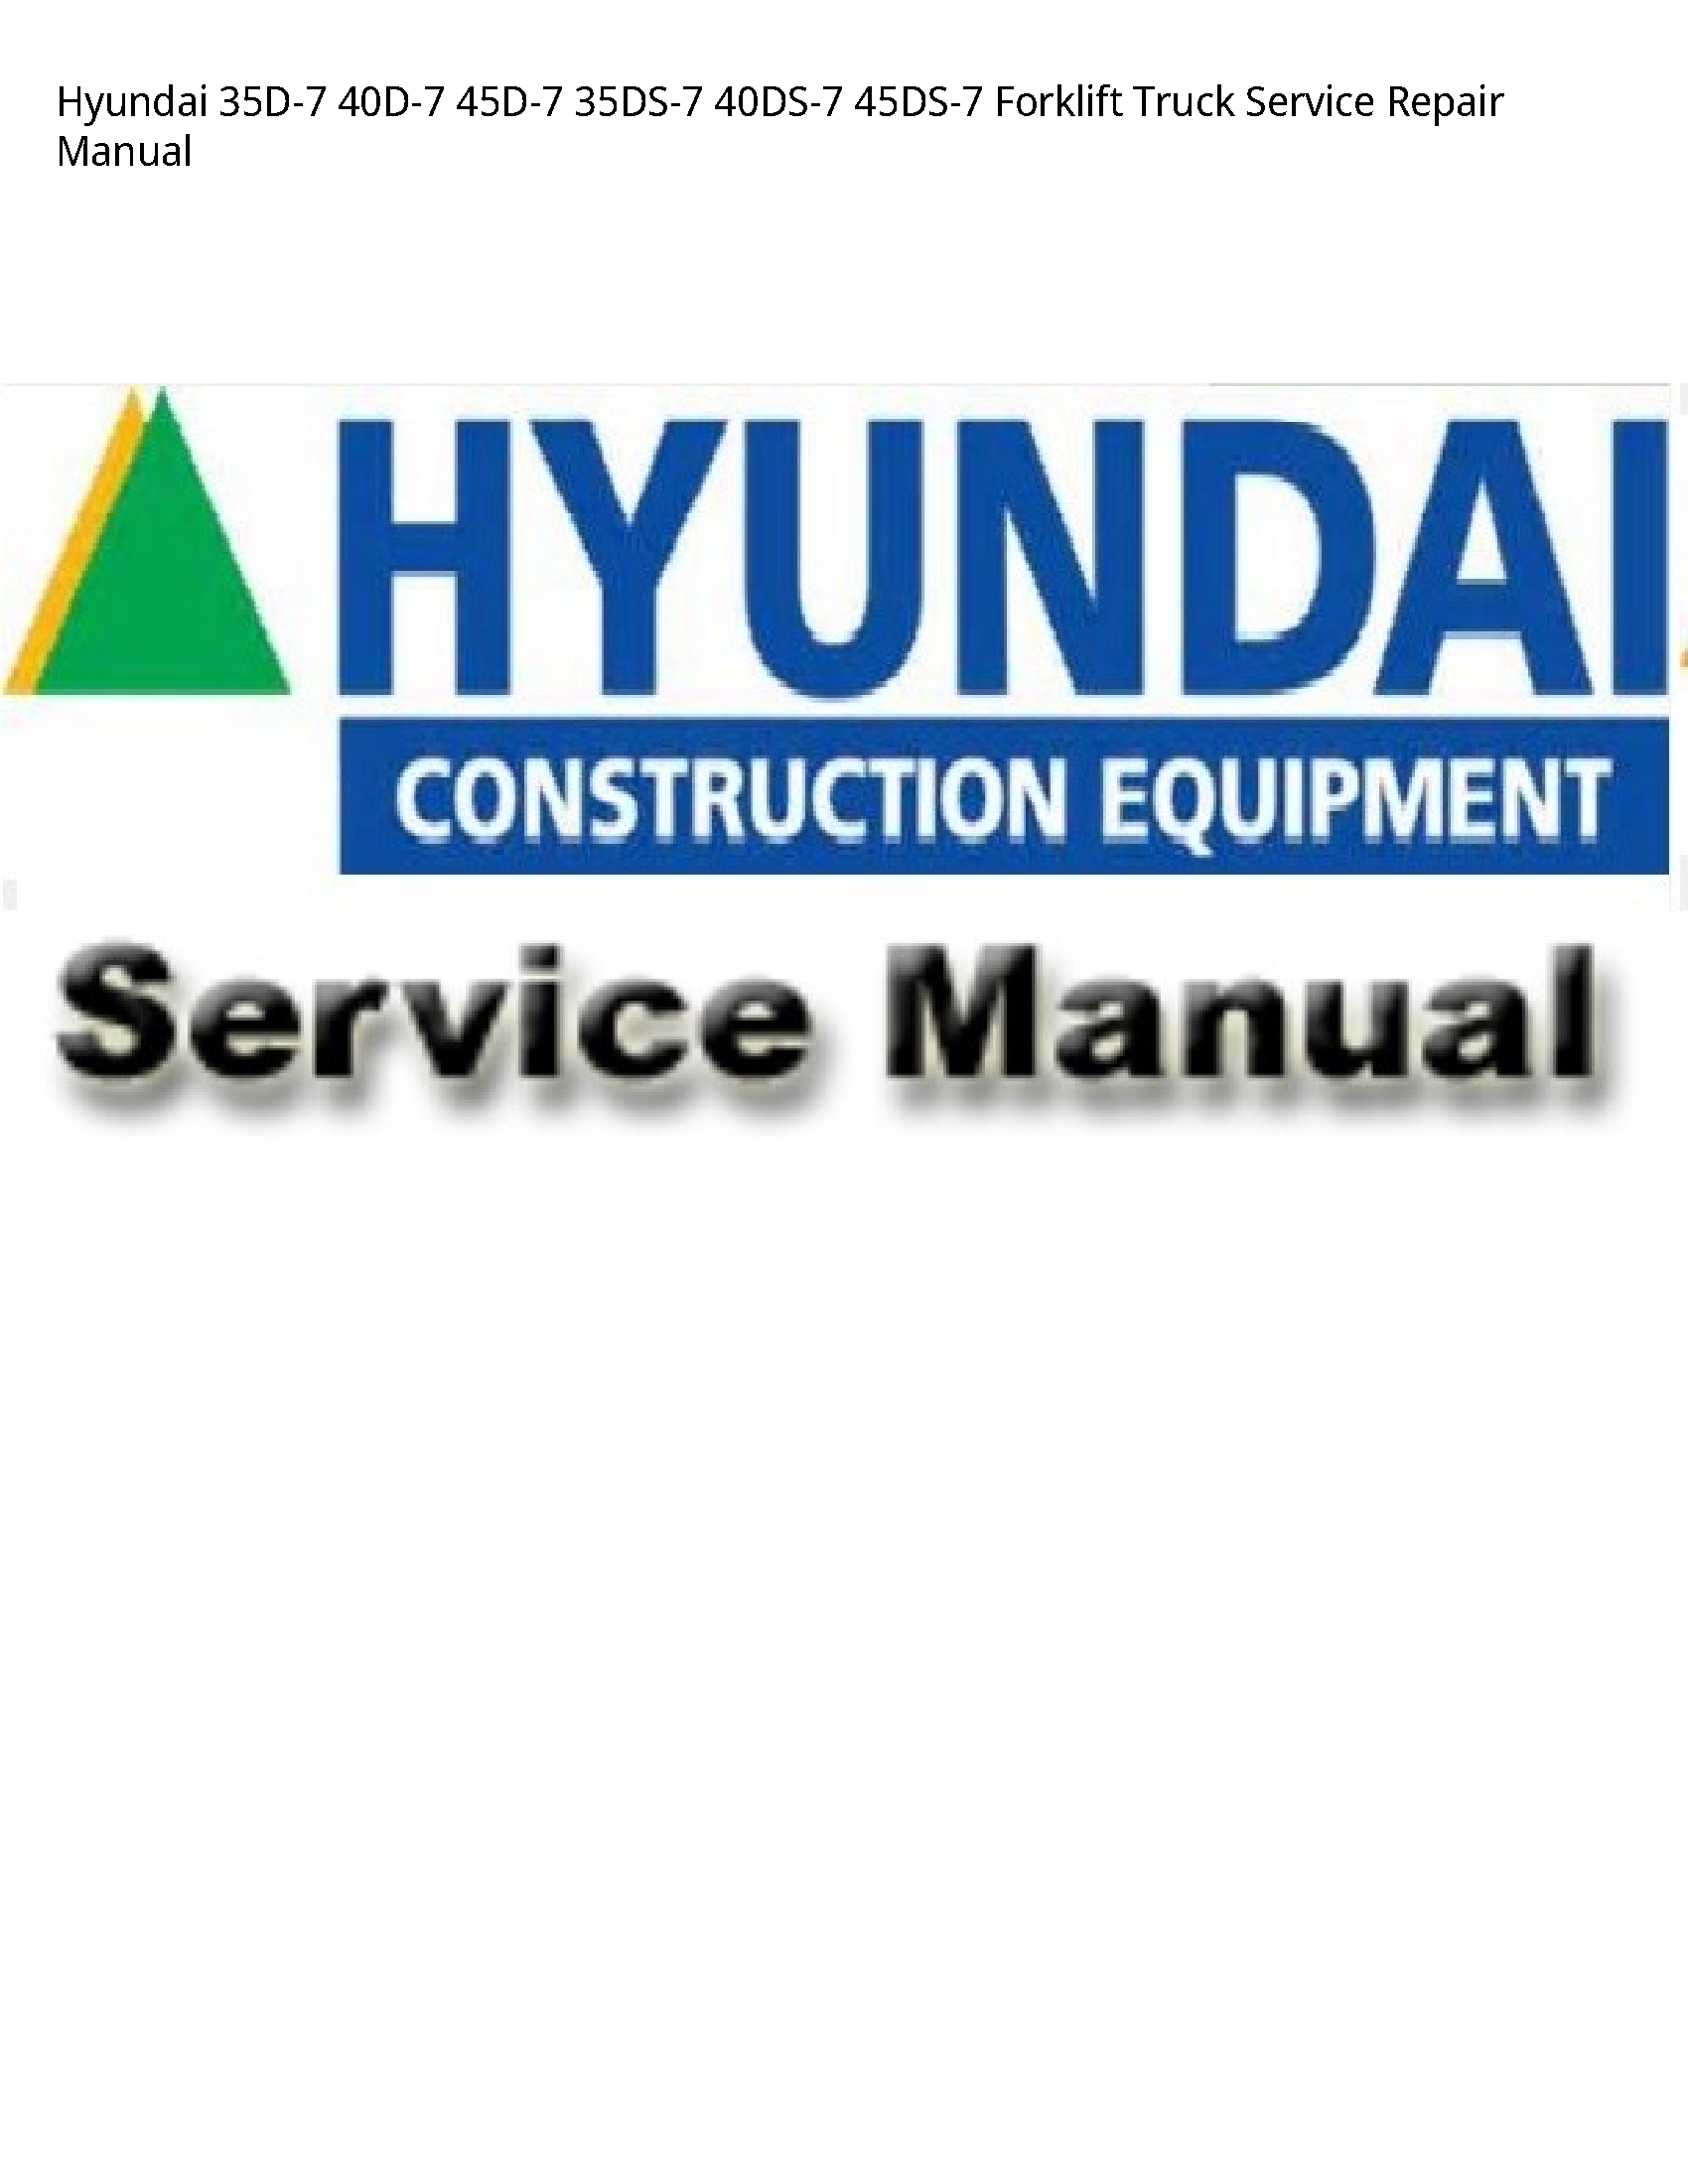 Hyundai 35D-7 Forklift Truck manual